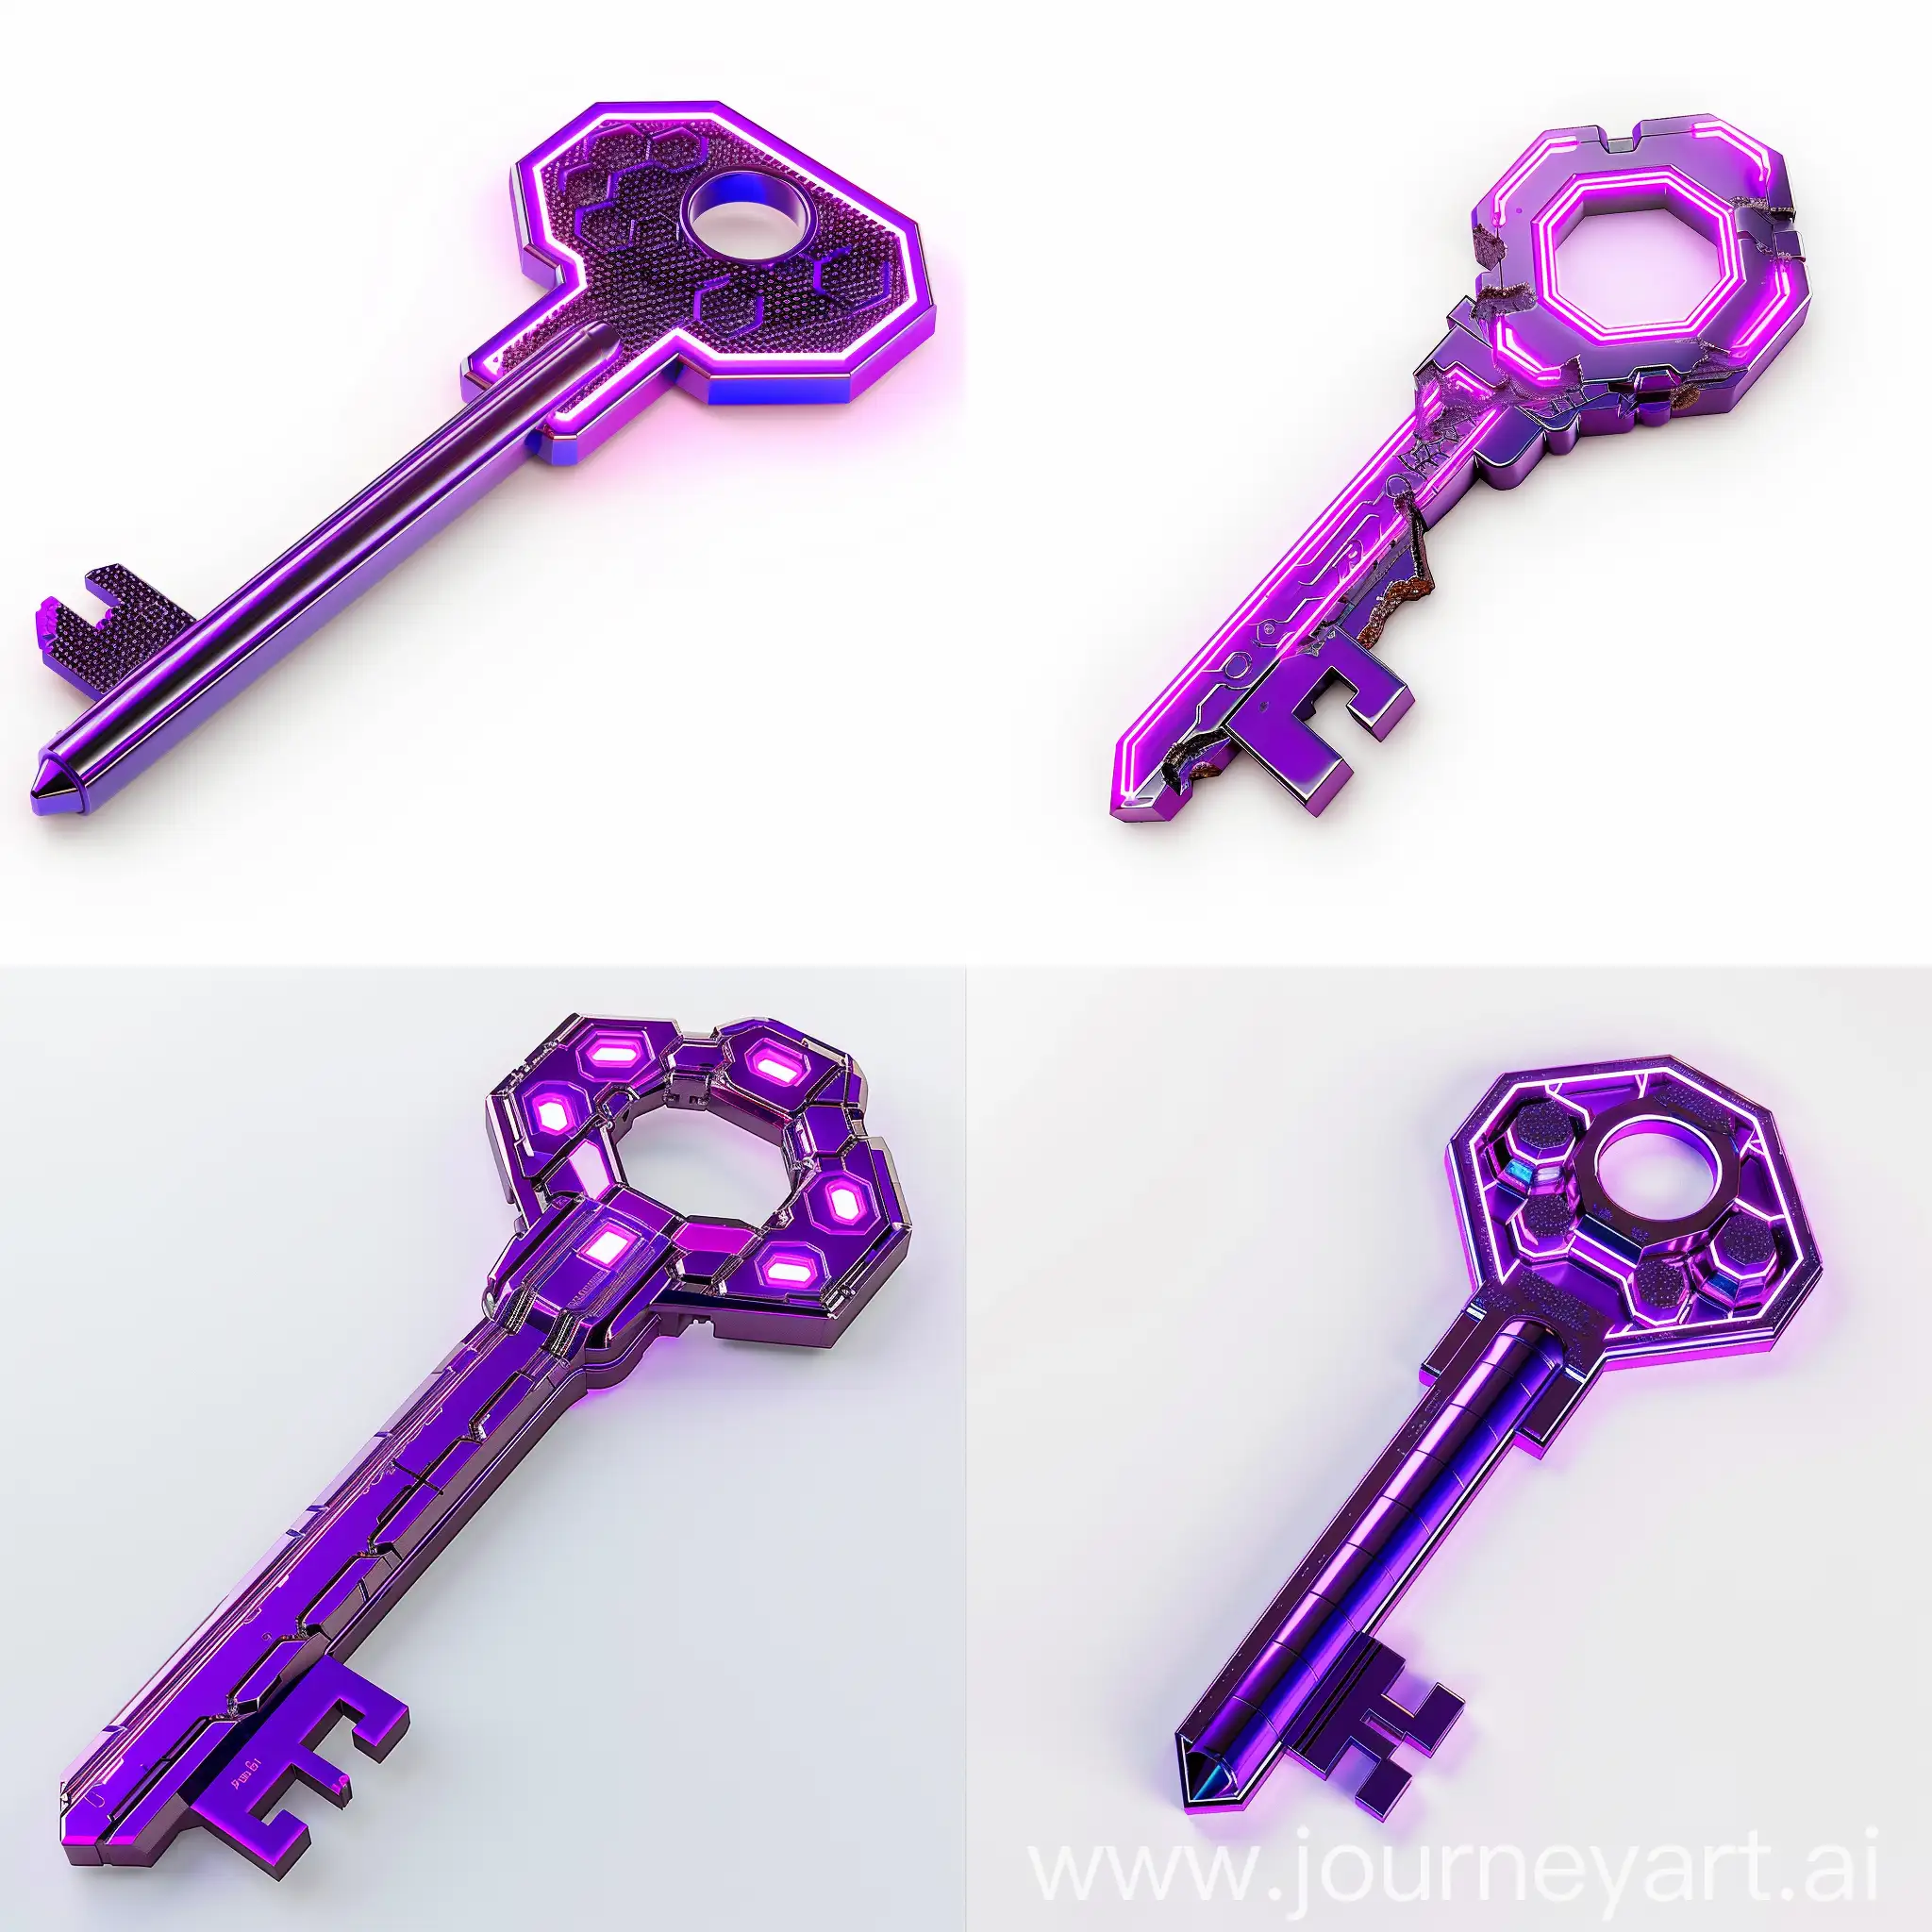 Futuristic-Purple-Cyberpunk-Key-with-Neon-Hexagon-Patterns-on-Clean-Background